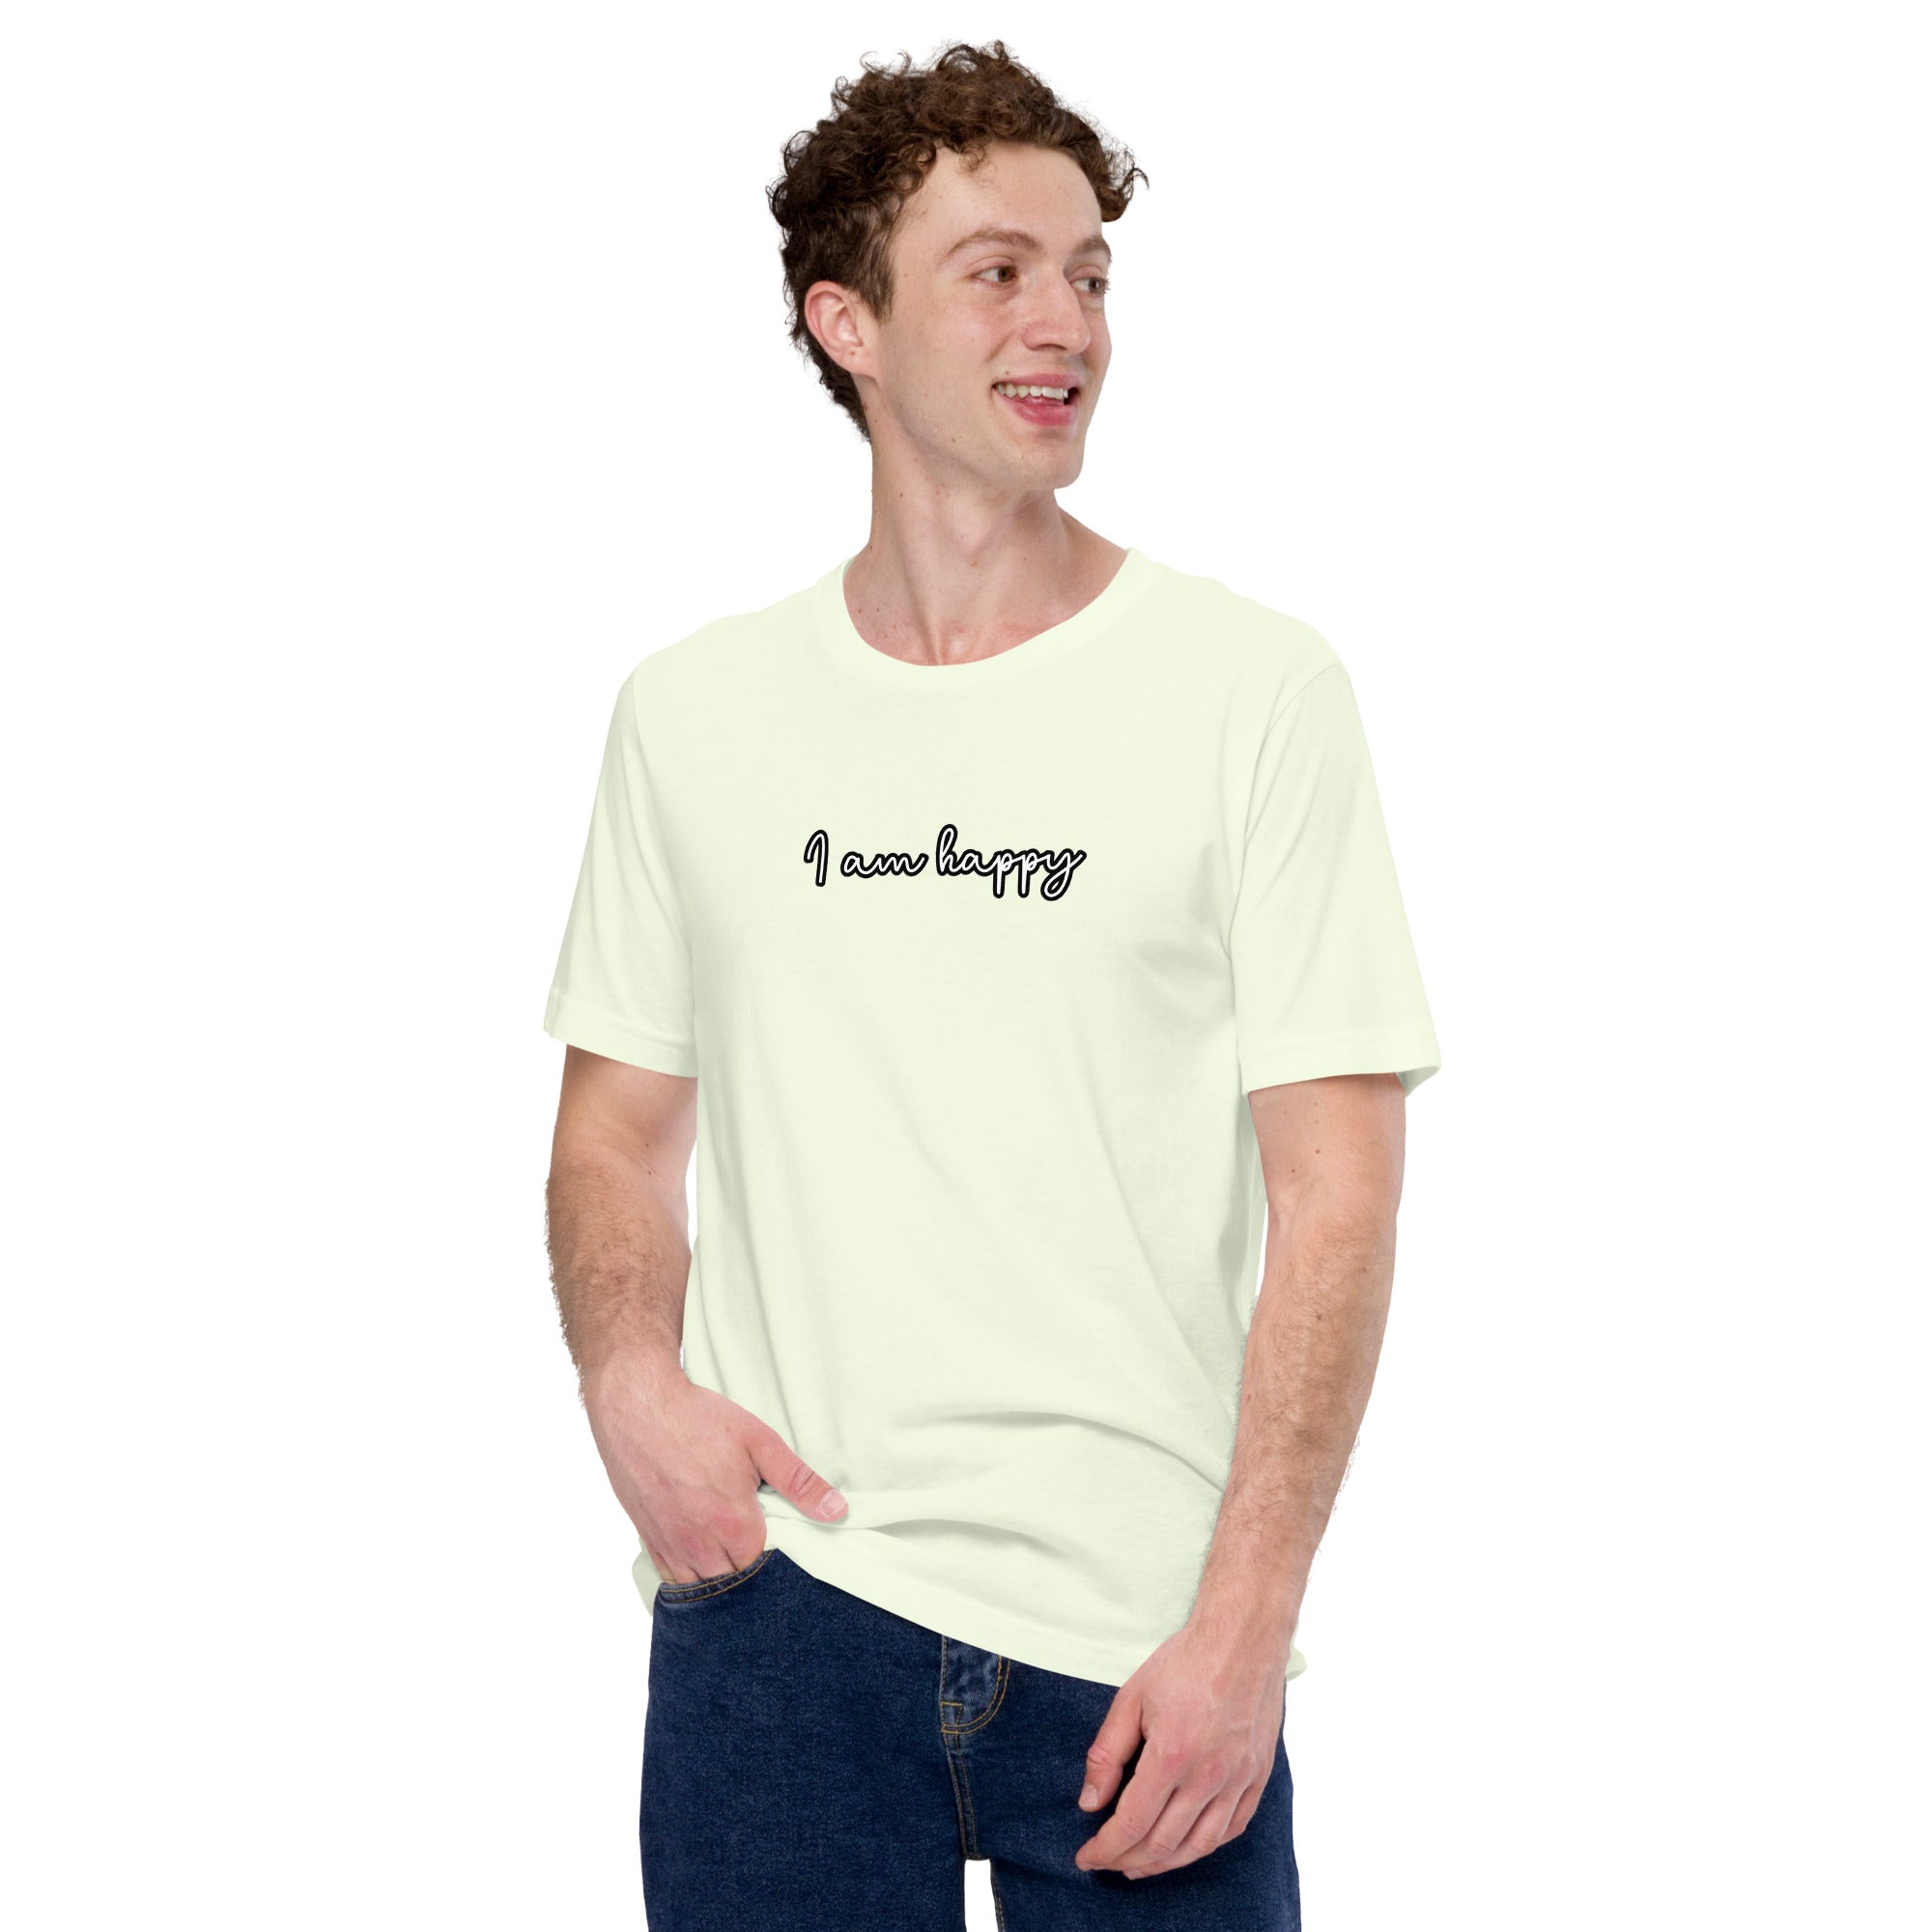 I Am Happy Premium Short-Sleeve Unisex T-Shirt | Positive Affirmation Tee